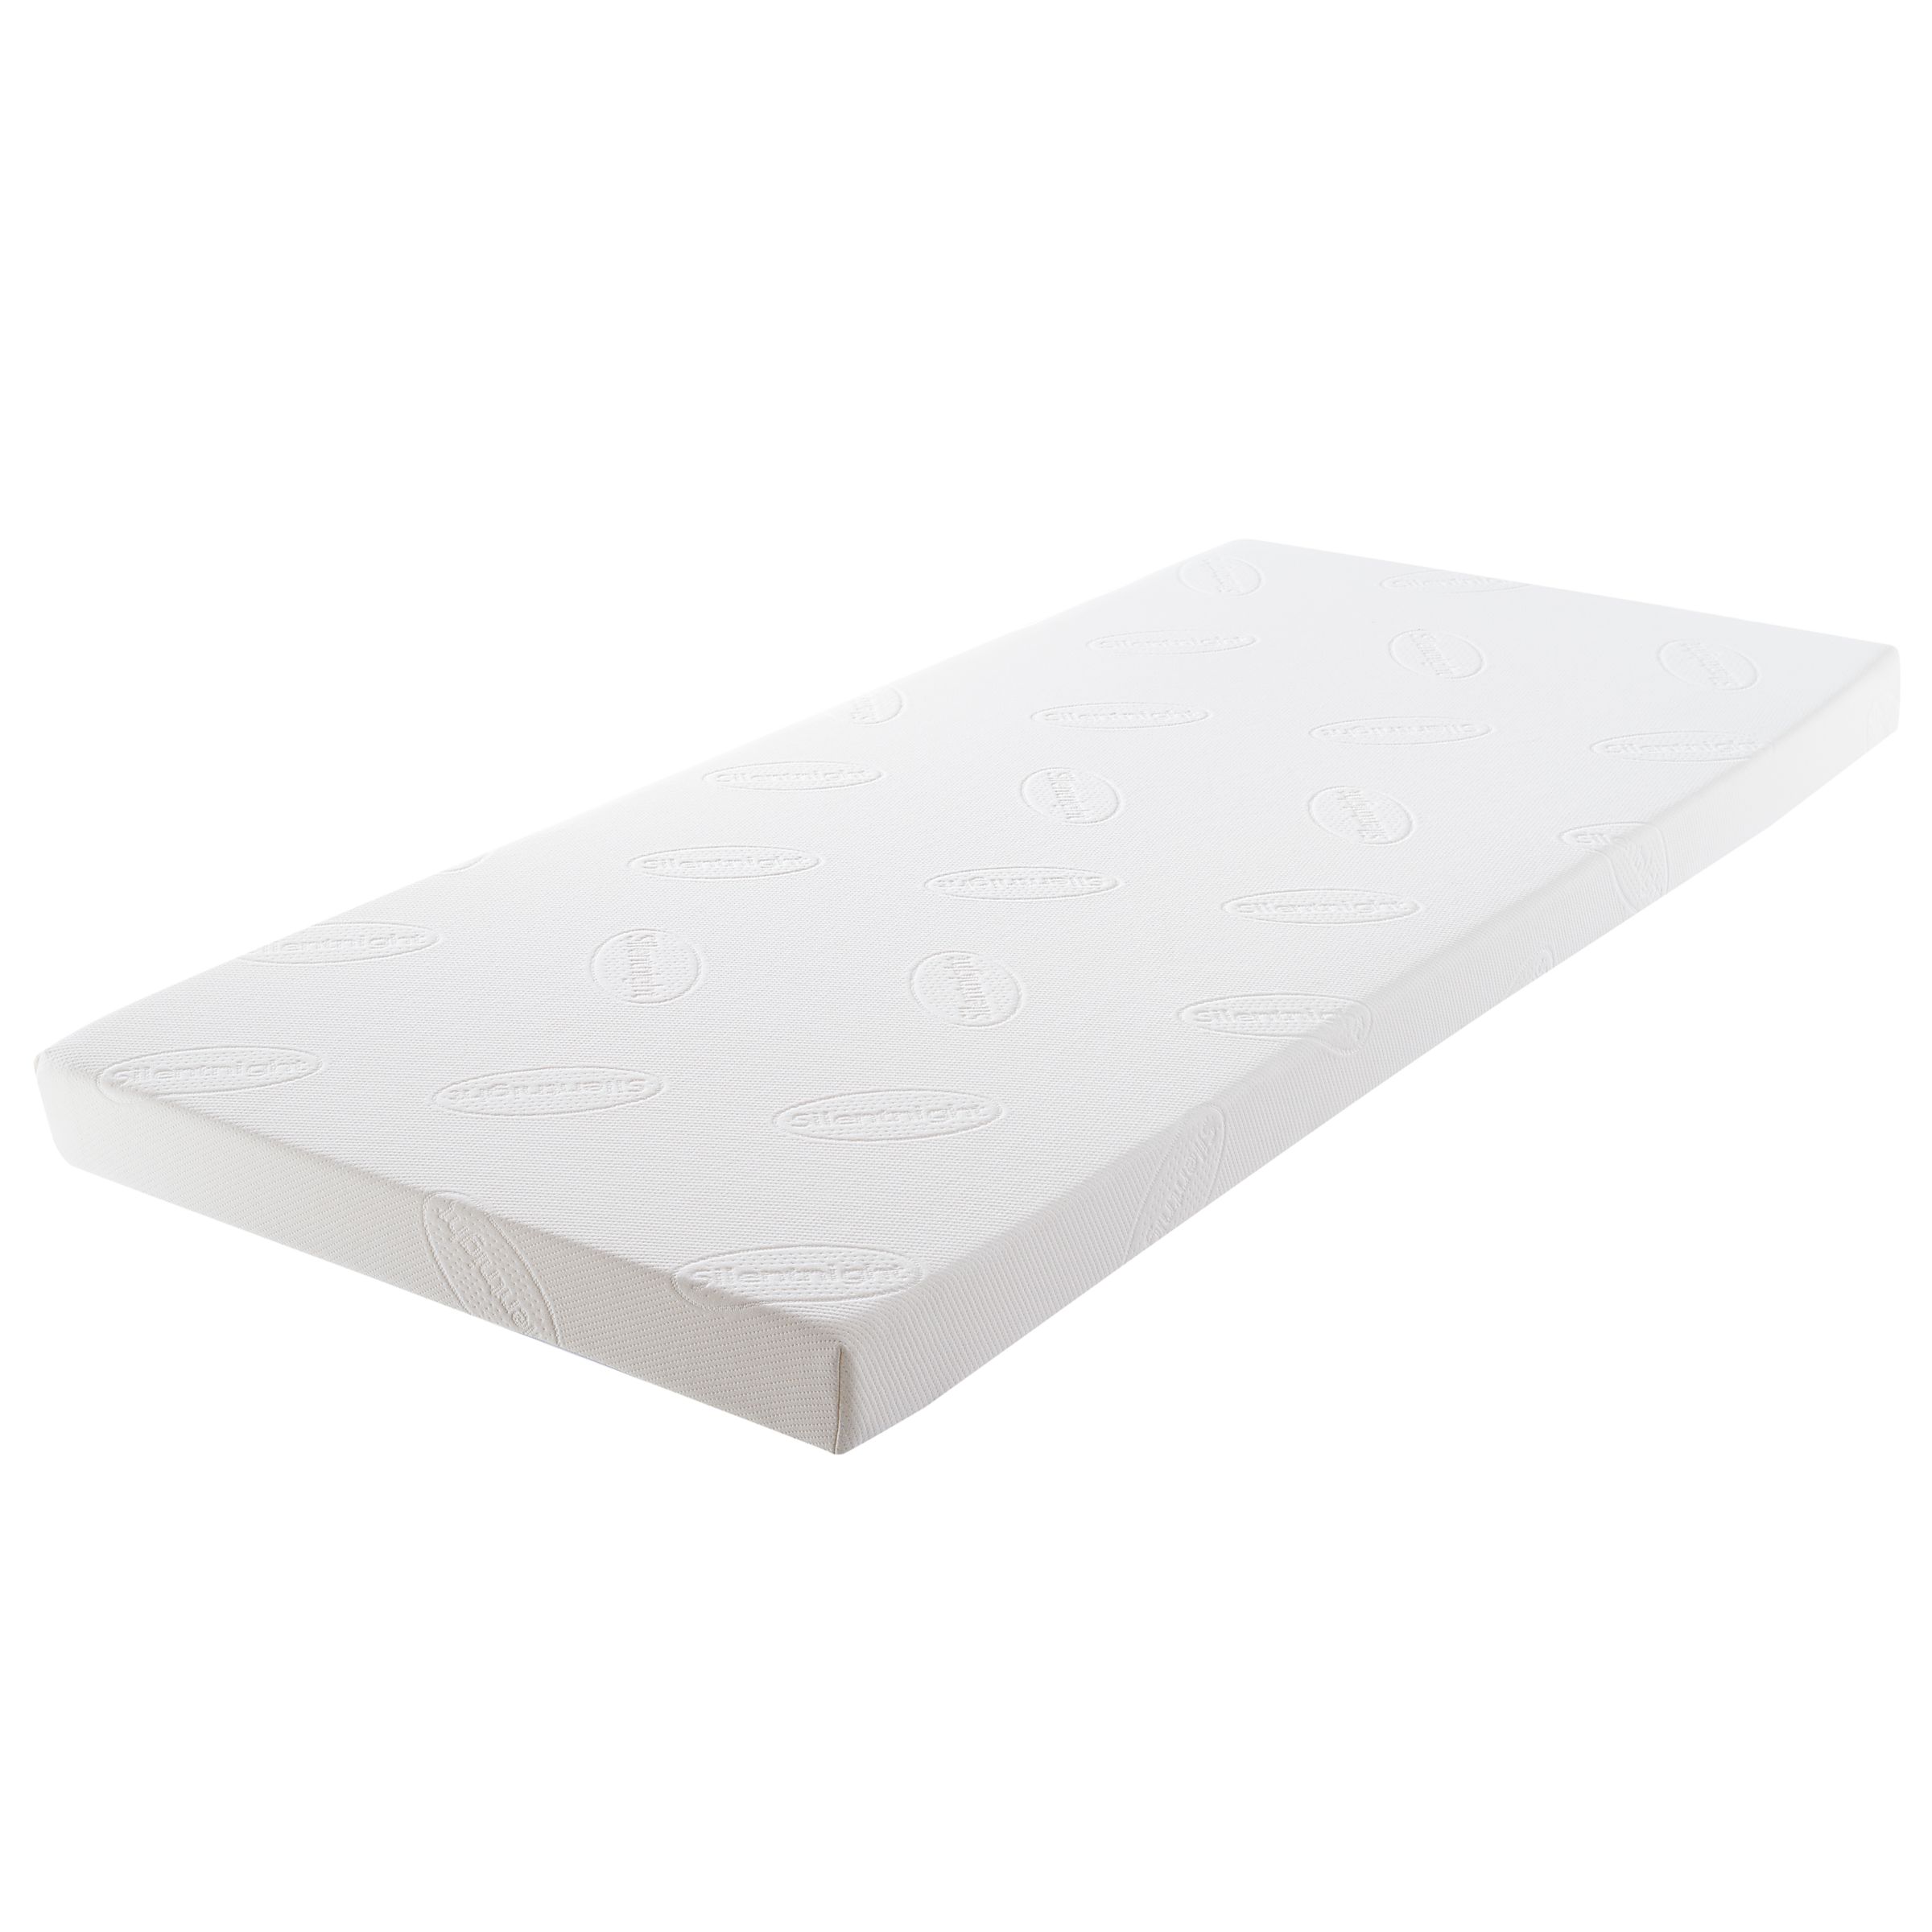 Photo of Silentnight rolled foam junior bunk bed mattress medium single